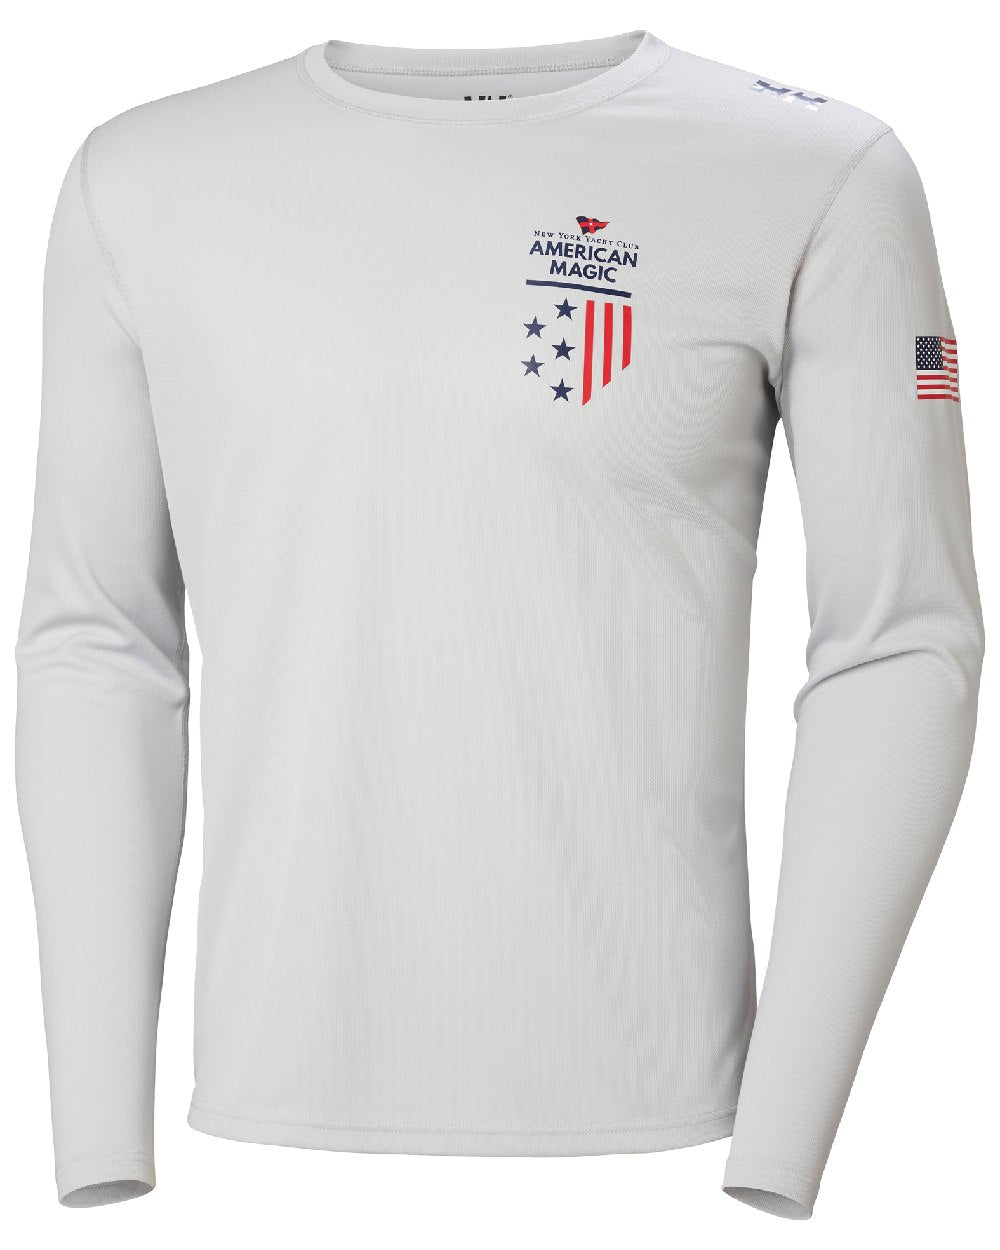 AM Grey Fog coloured Helly Hansen American Magic Technical Crew Long Sleeve Shirt on white background 